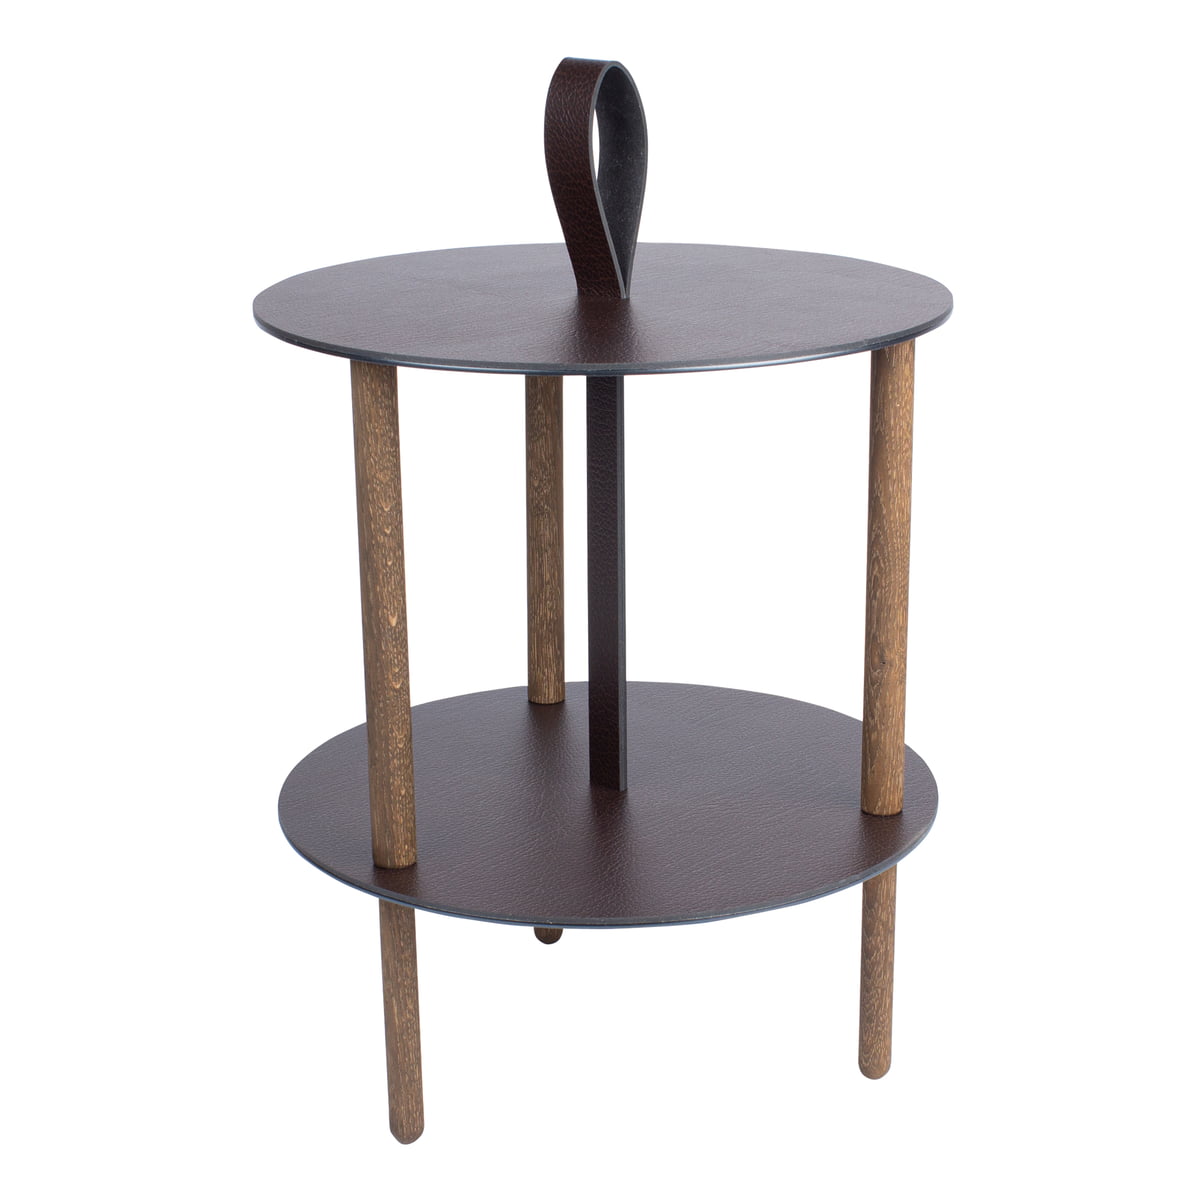 Linddna - Strap table d'appoint, ø 38 x h 46 cm, chêne fumé / brun taureau